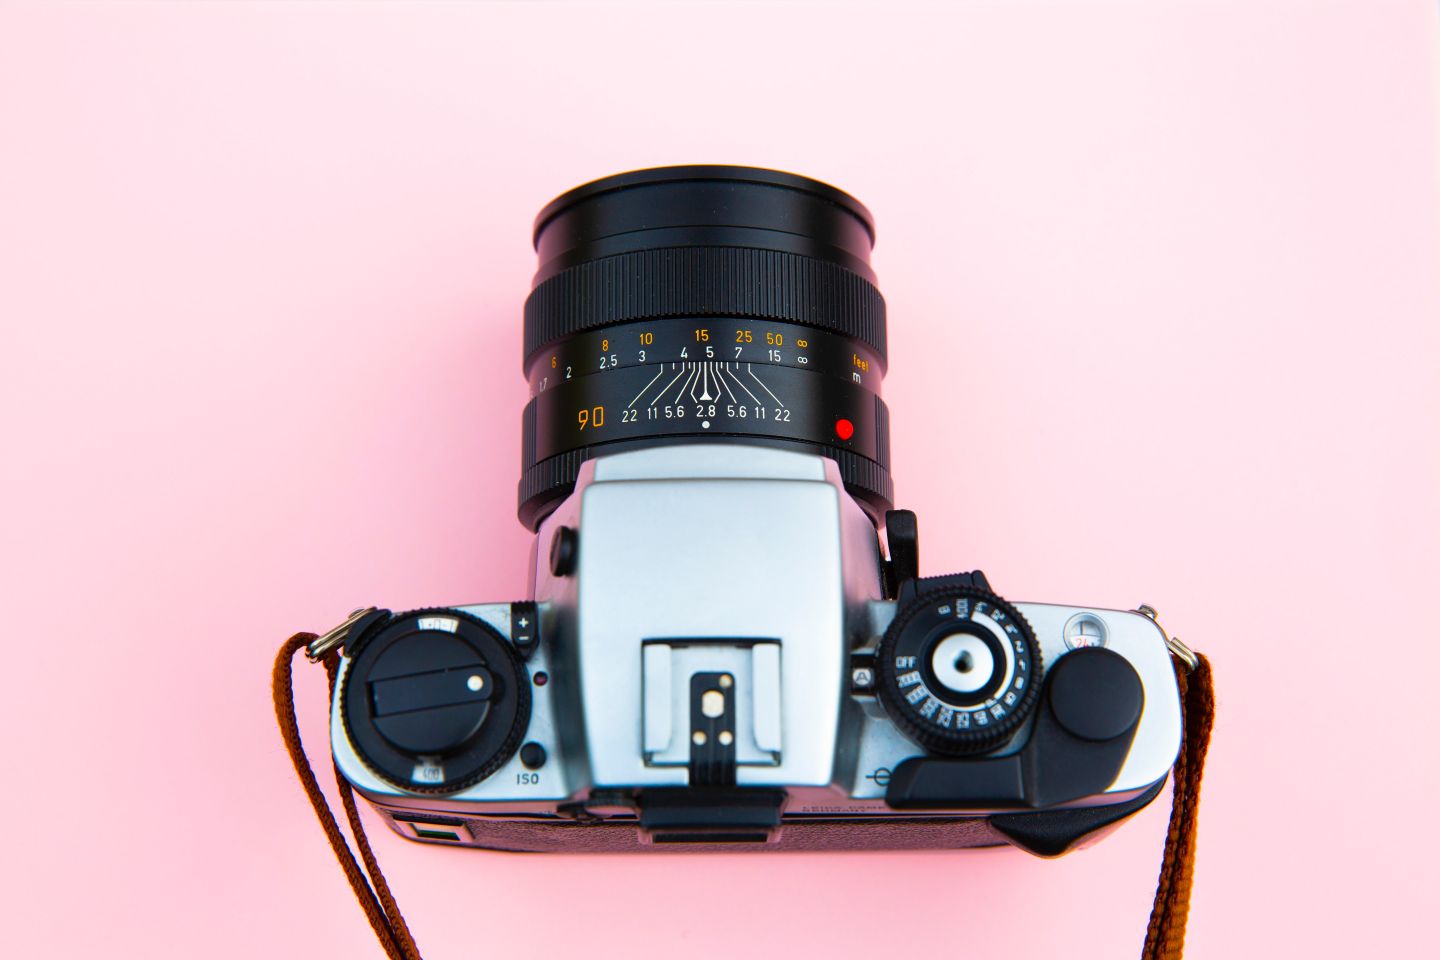 leica r camera with 90mm lens